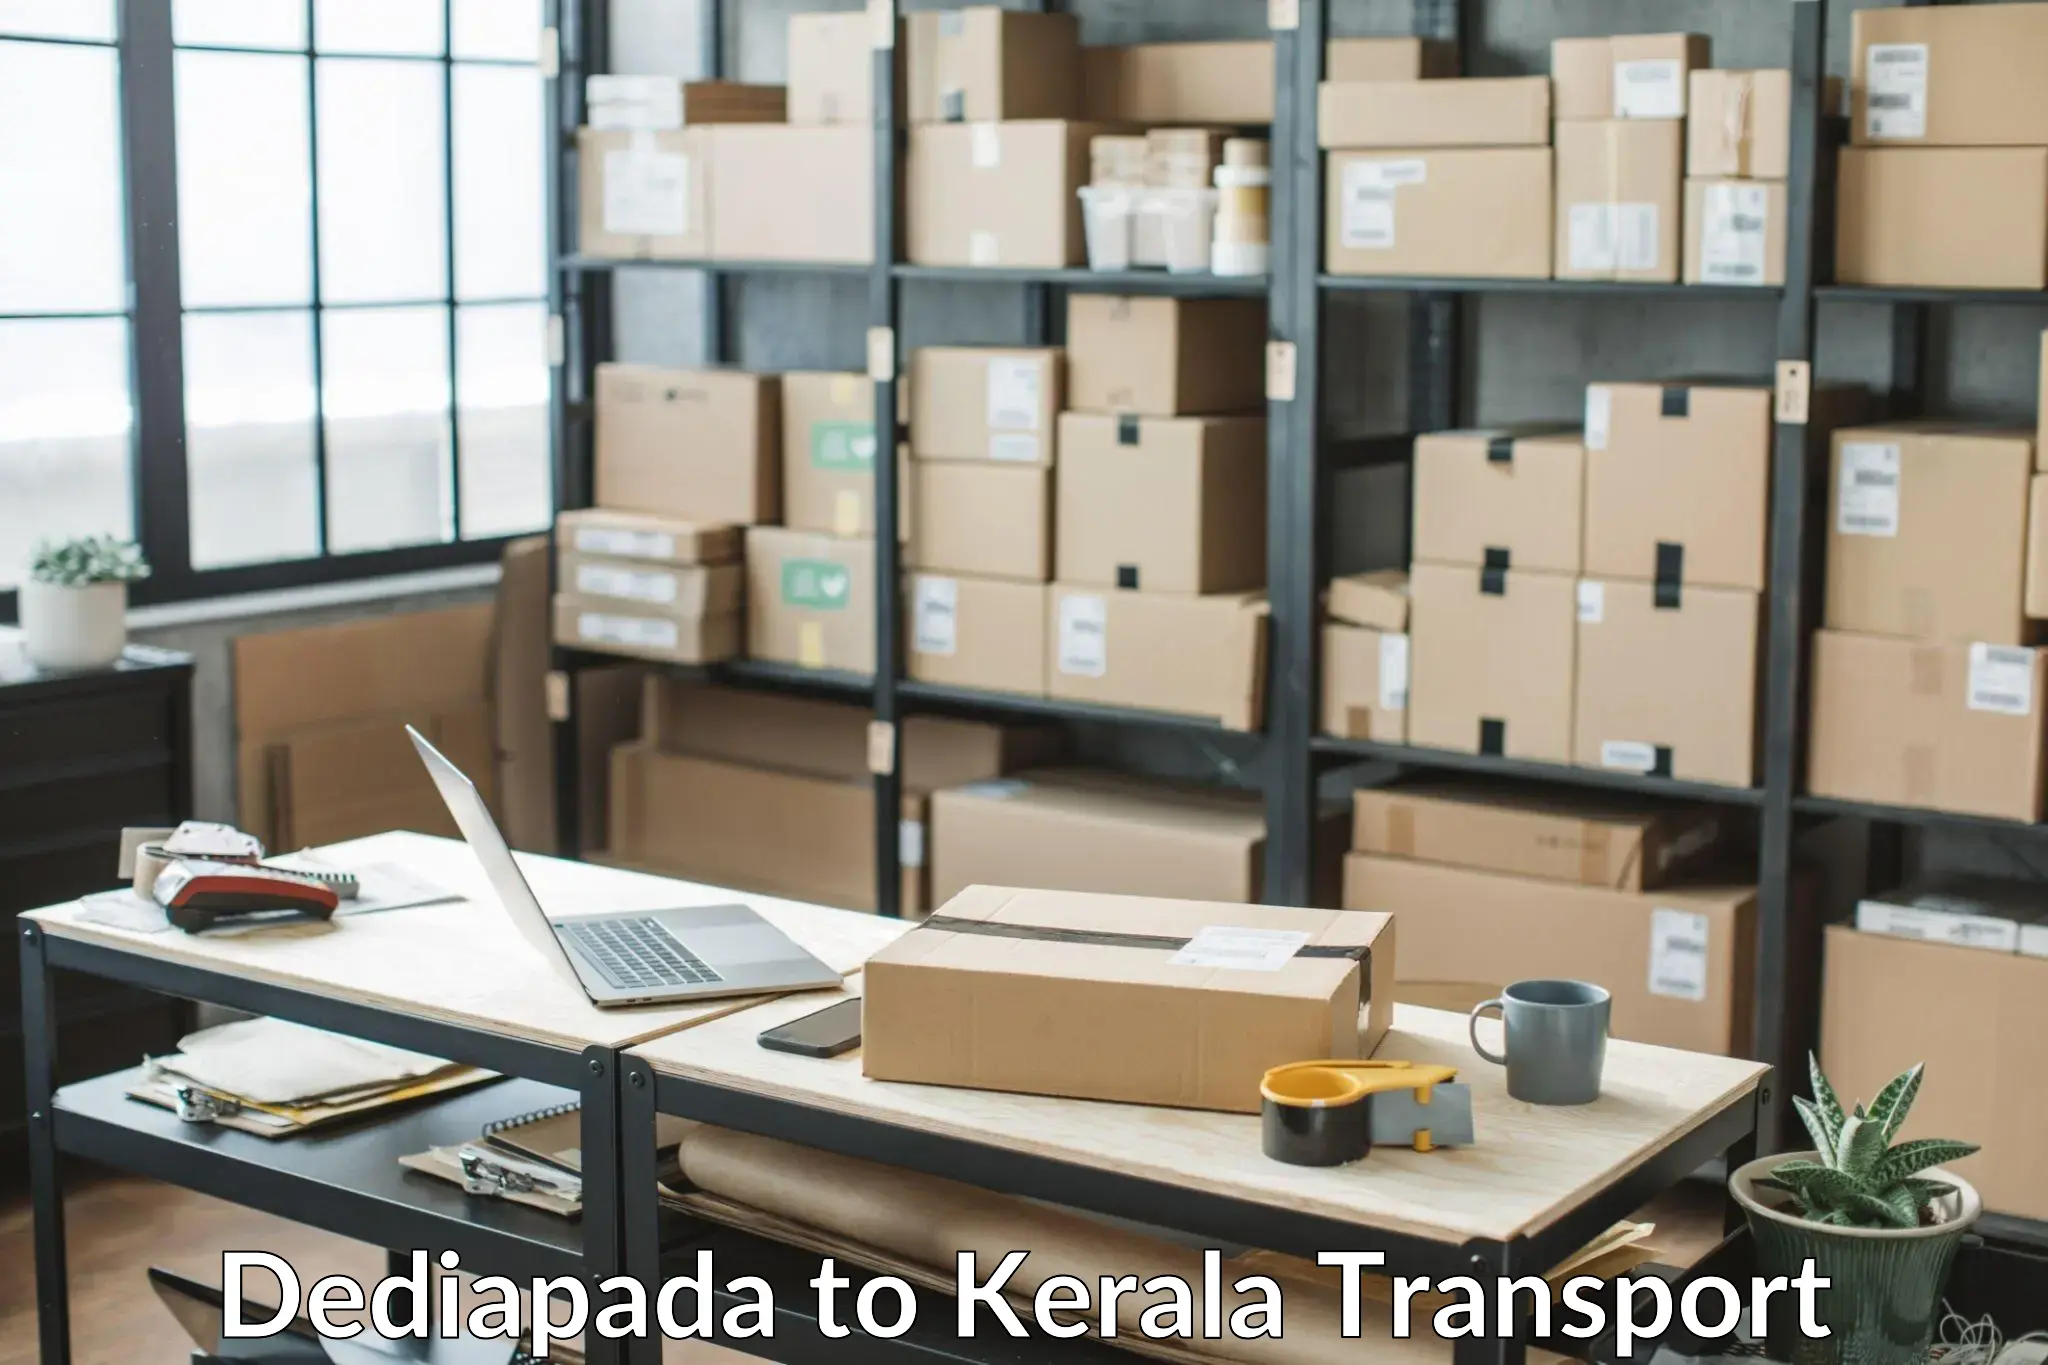 Goods delivery service Dediapada to Kerala